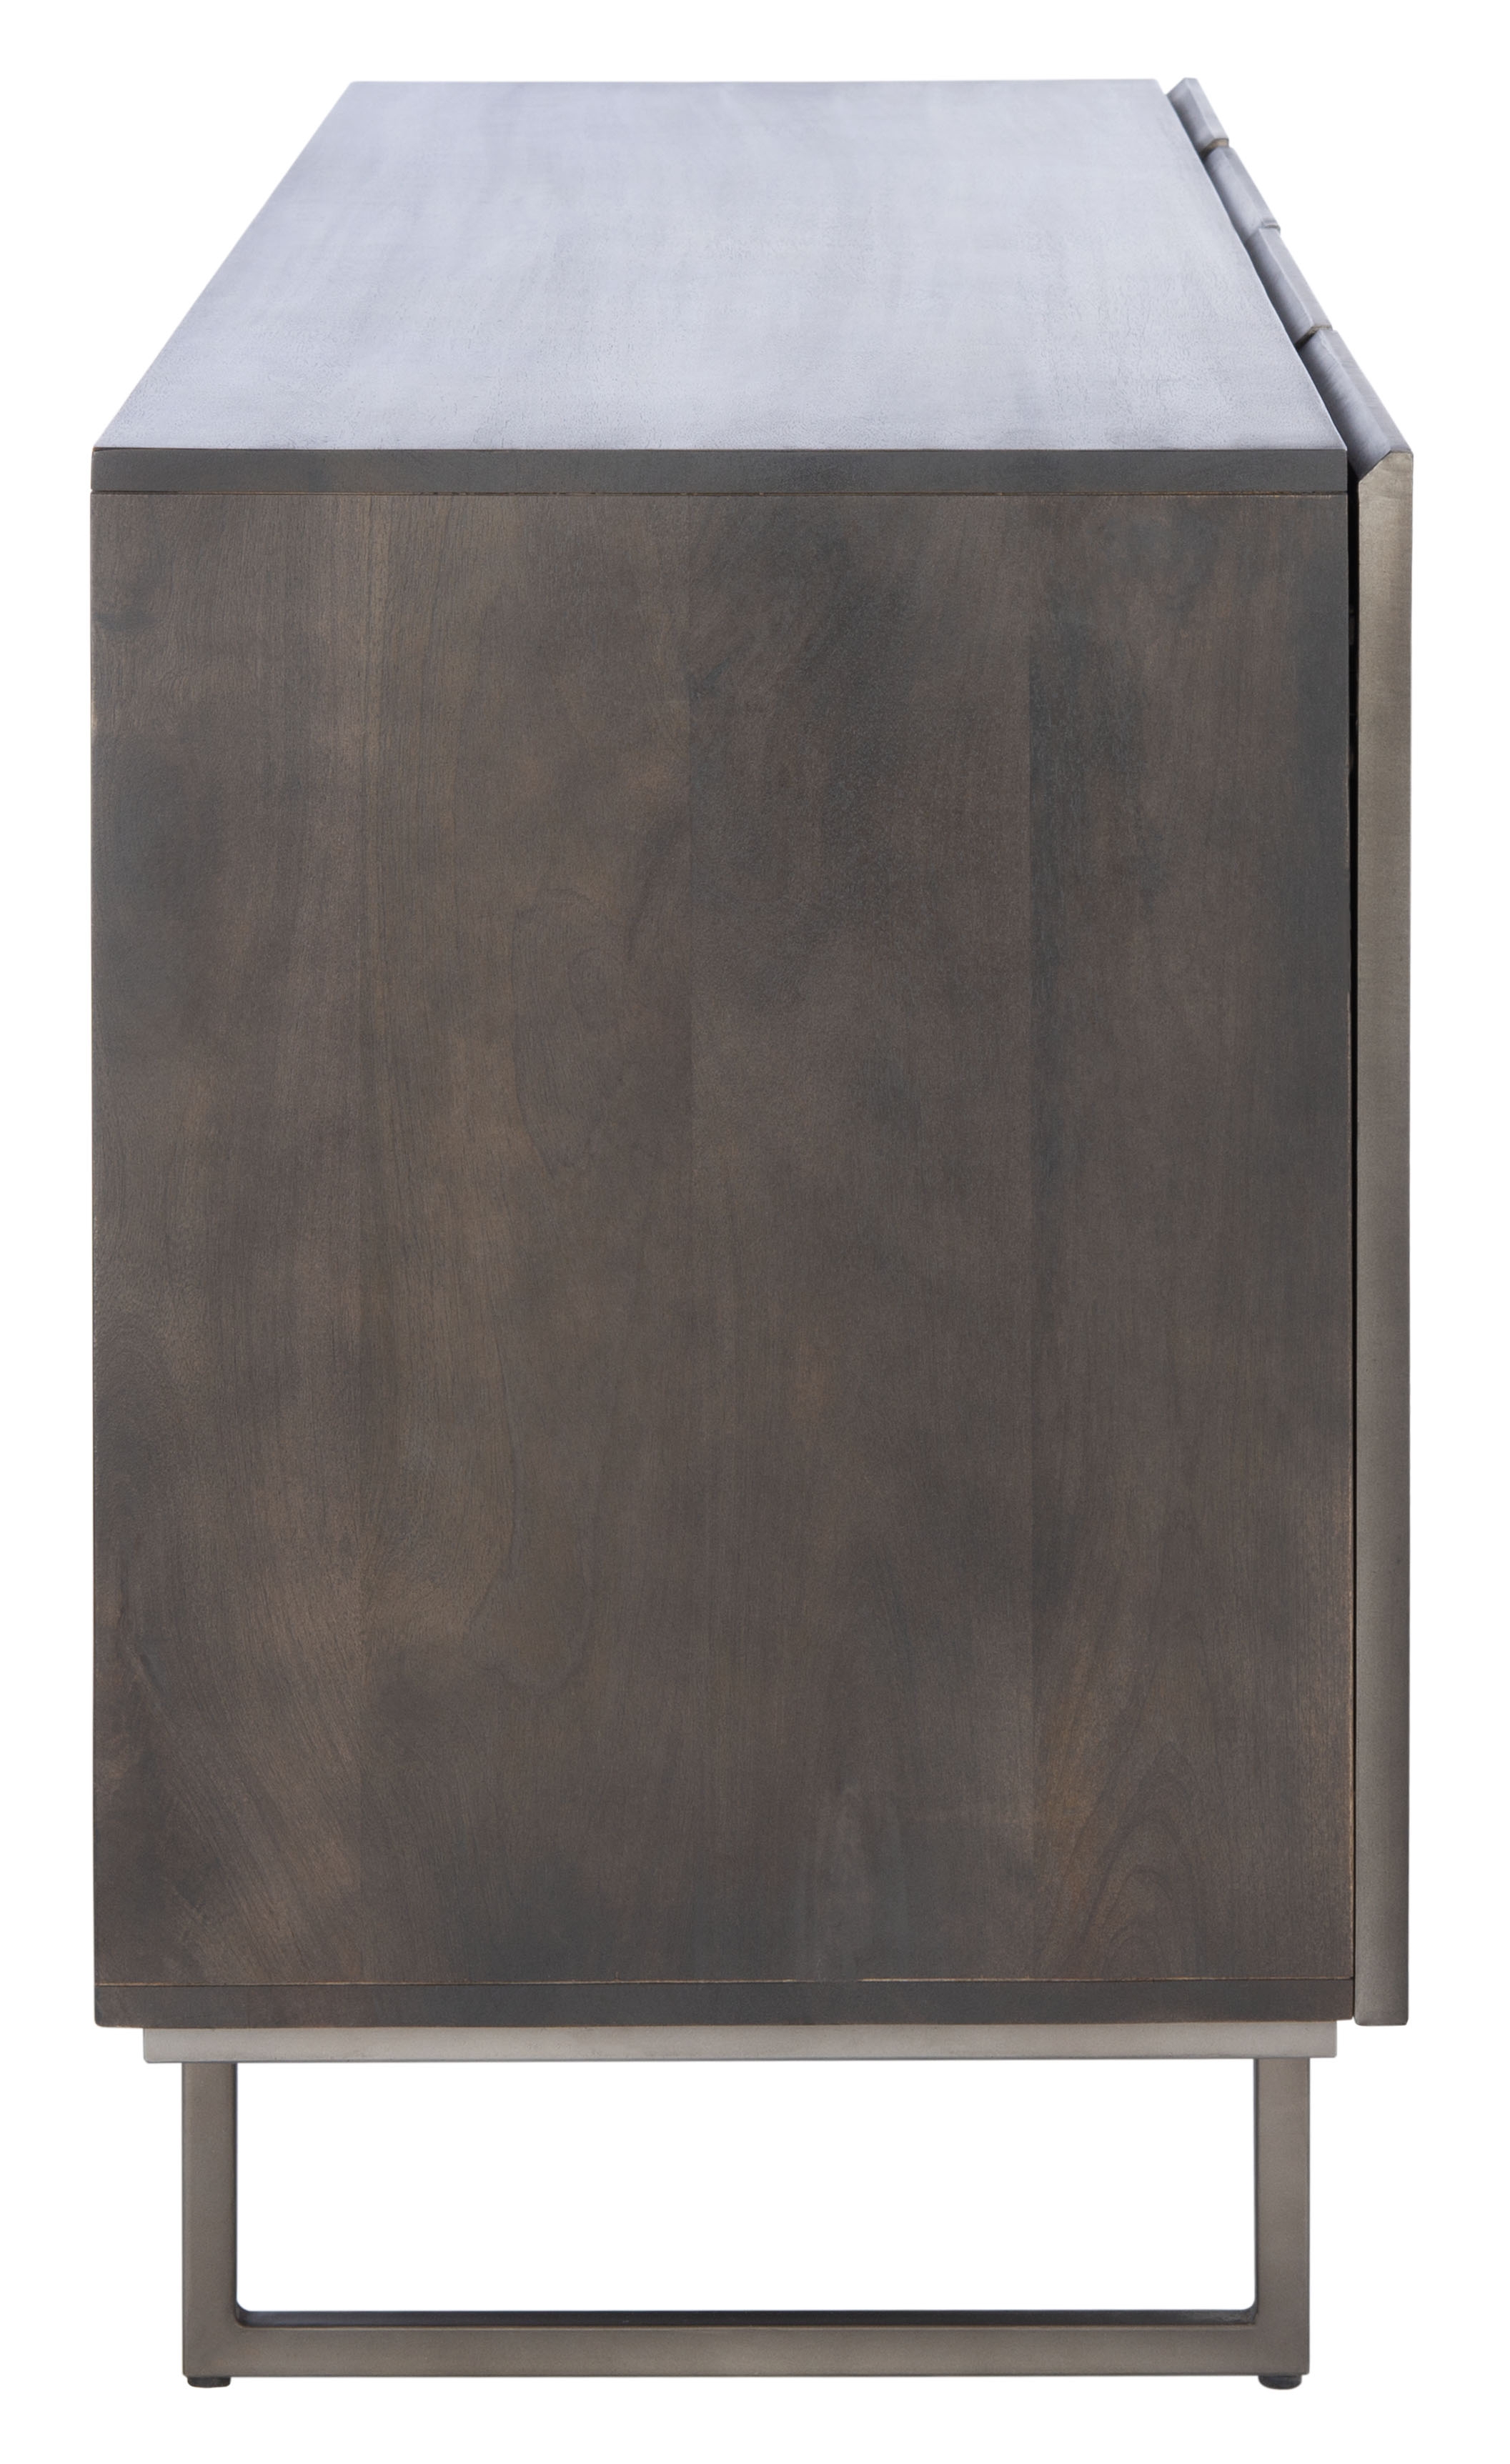 Boone Abstract Wave 4 Door Sideboard - Brown/Silver - Arlo Home - Image 1